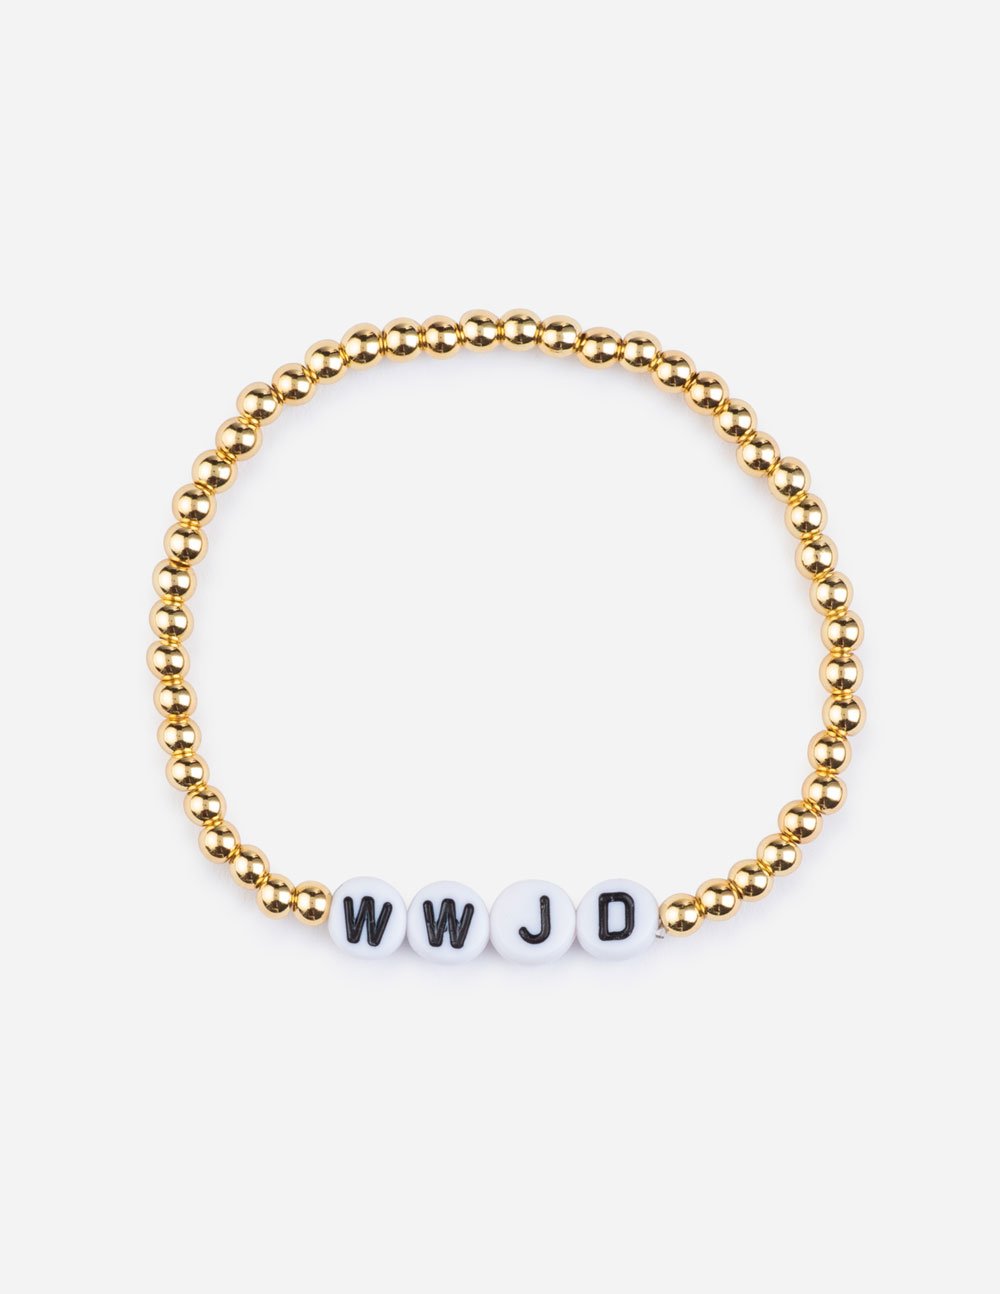 Dicksons, WWJD Woven Bracelet, Polyester, Assortment, 10 Inches | Mardel |  102293